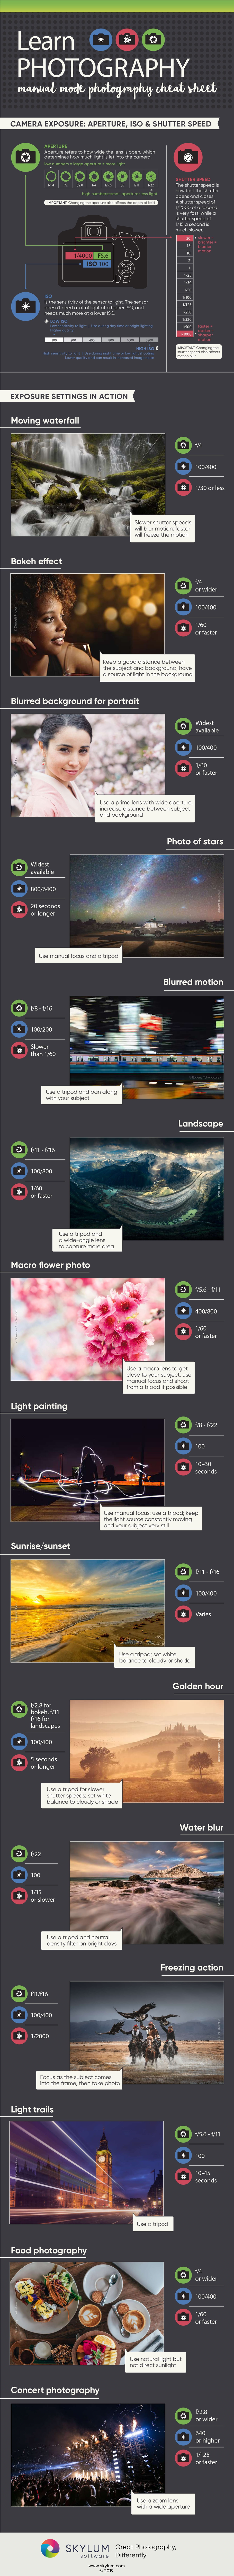 Photography Cheat Sheet: Manual Mode Camera Settings (Infographic)(2)